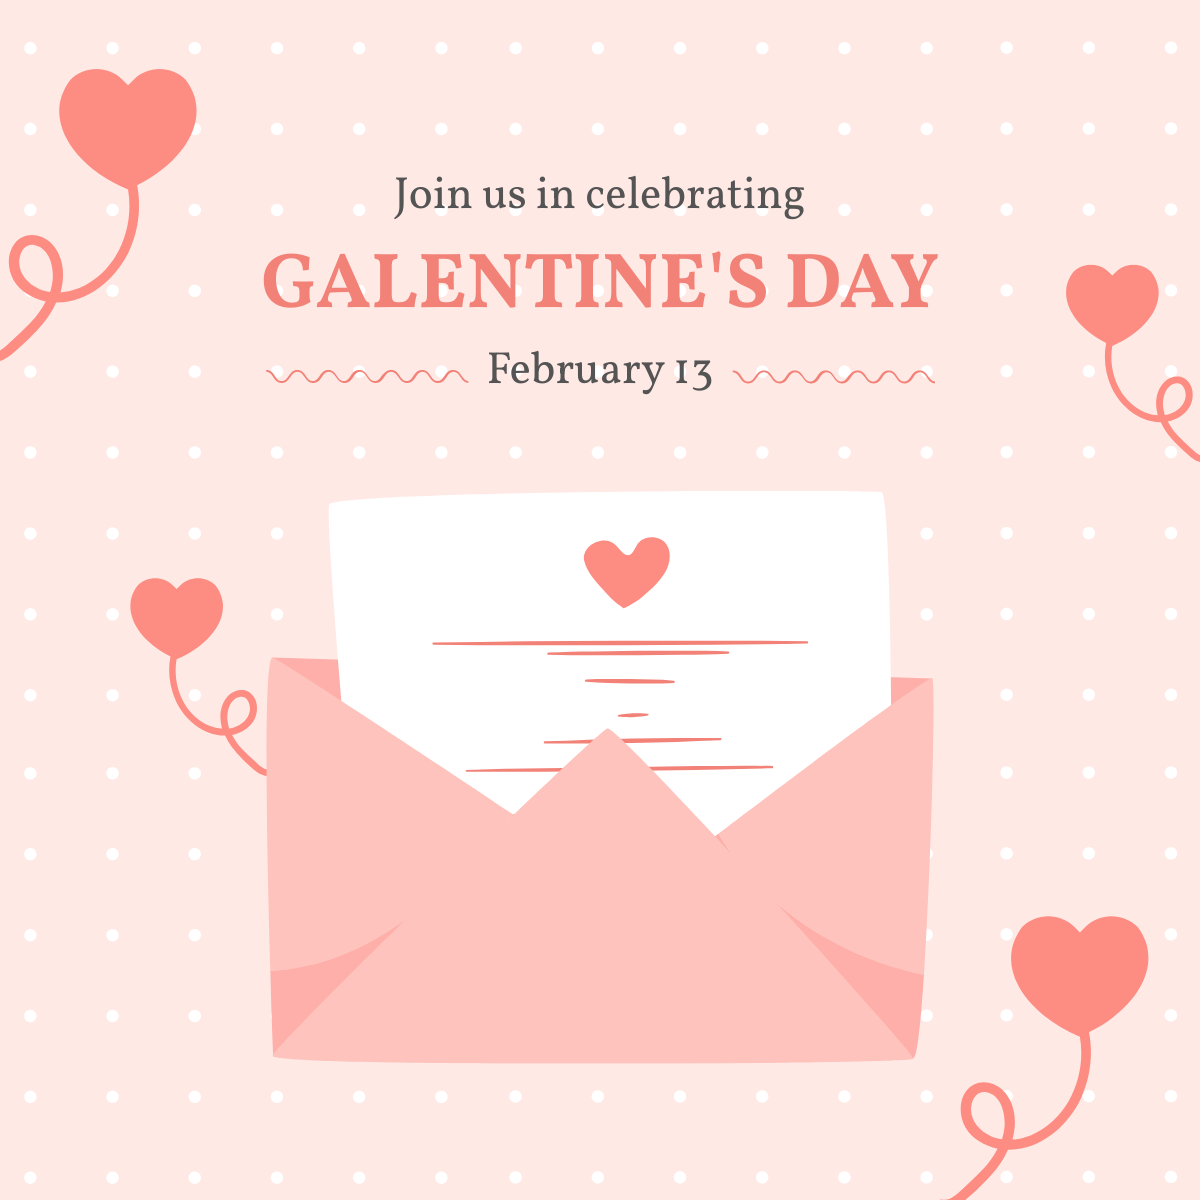 Free Galentine's Day Invitation Linkedin Post Template